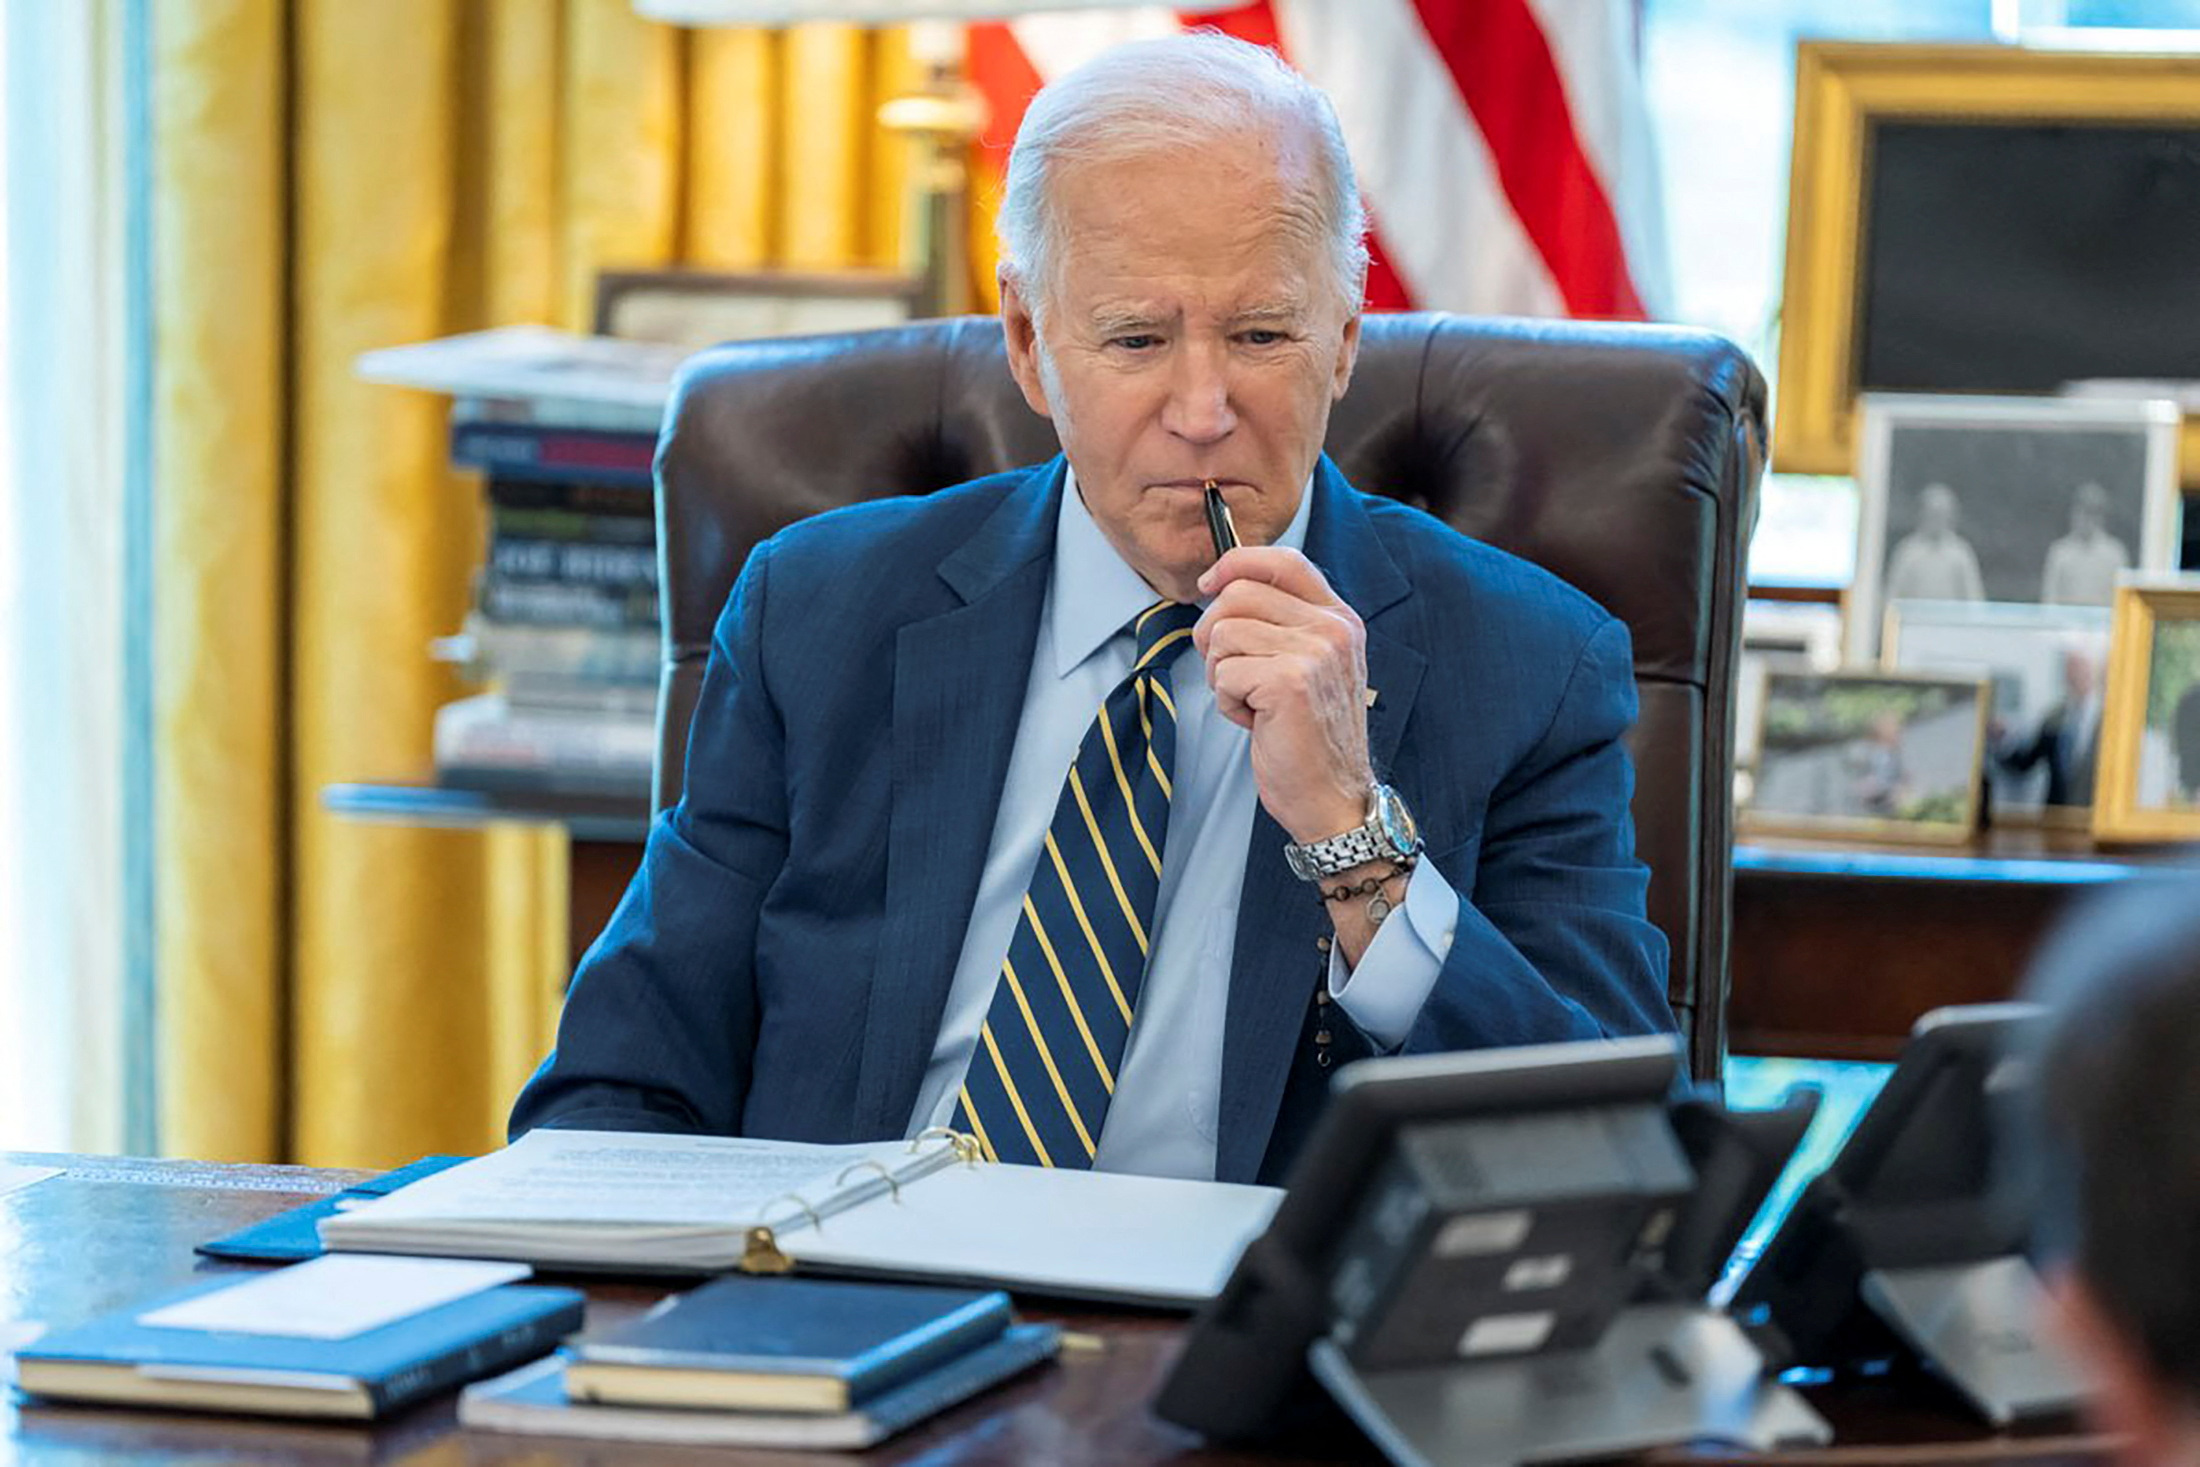 U.S. President Joe Biden speaks by phone with Israeli Prime Minister Benjamin Netanyahu from the White House in Washington